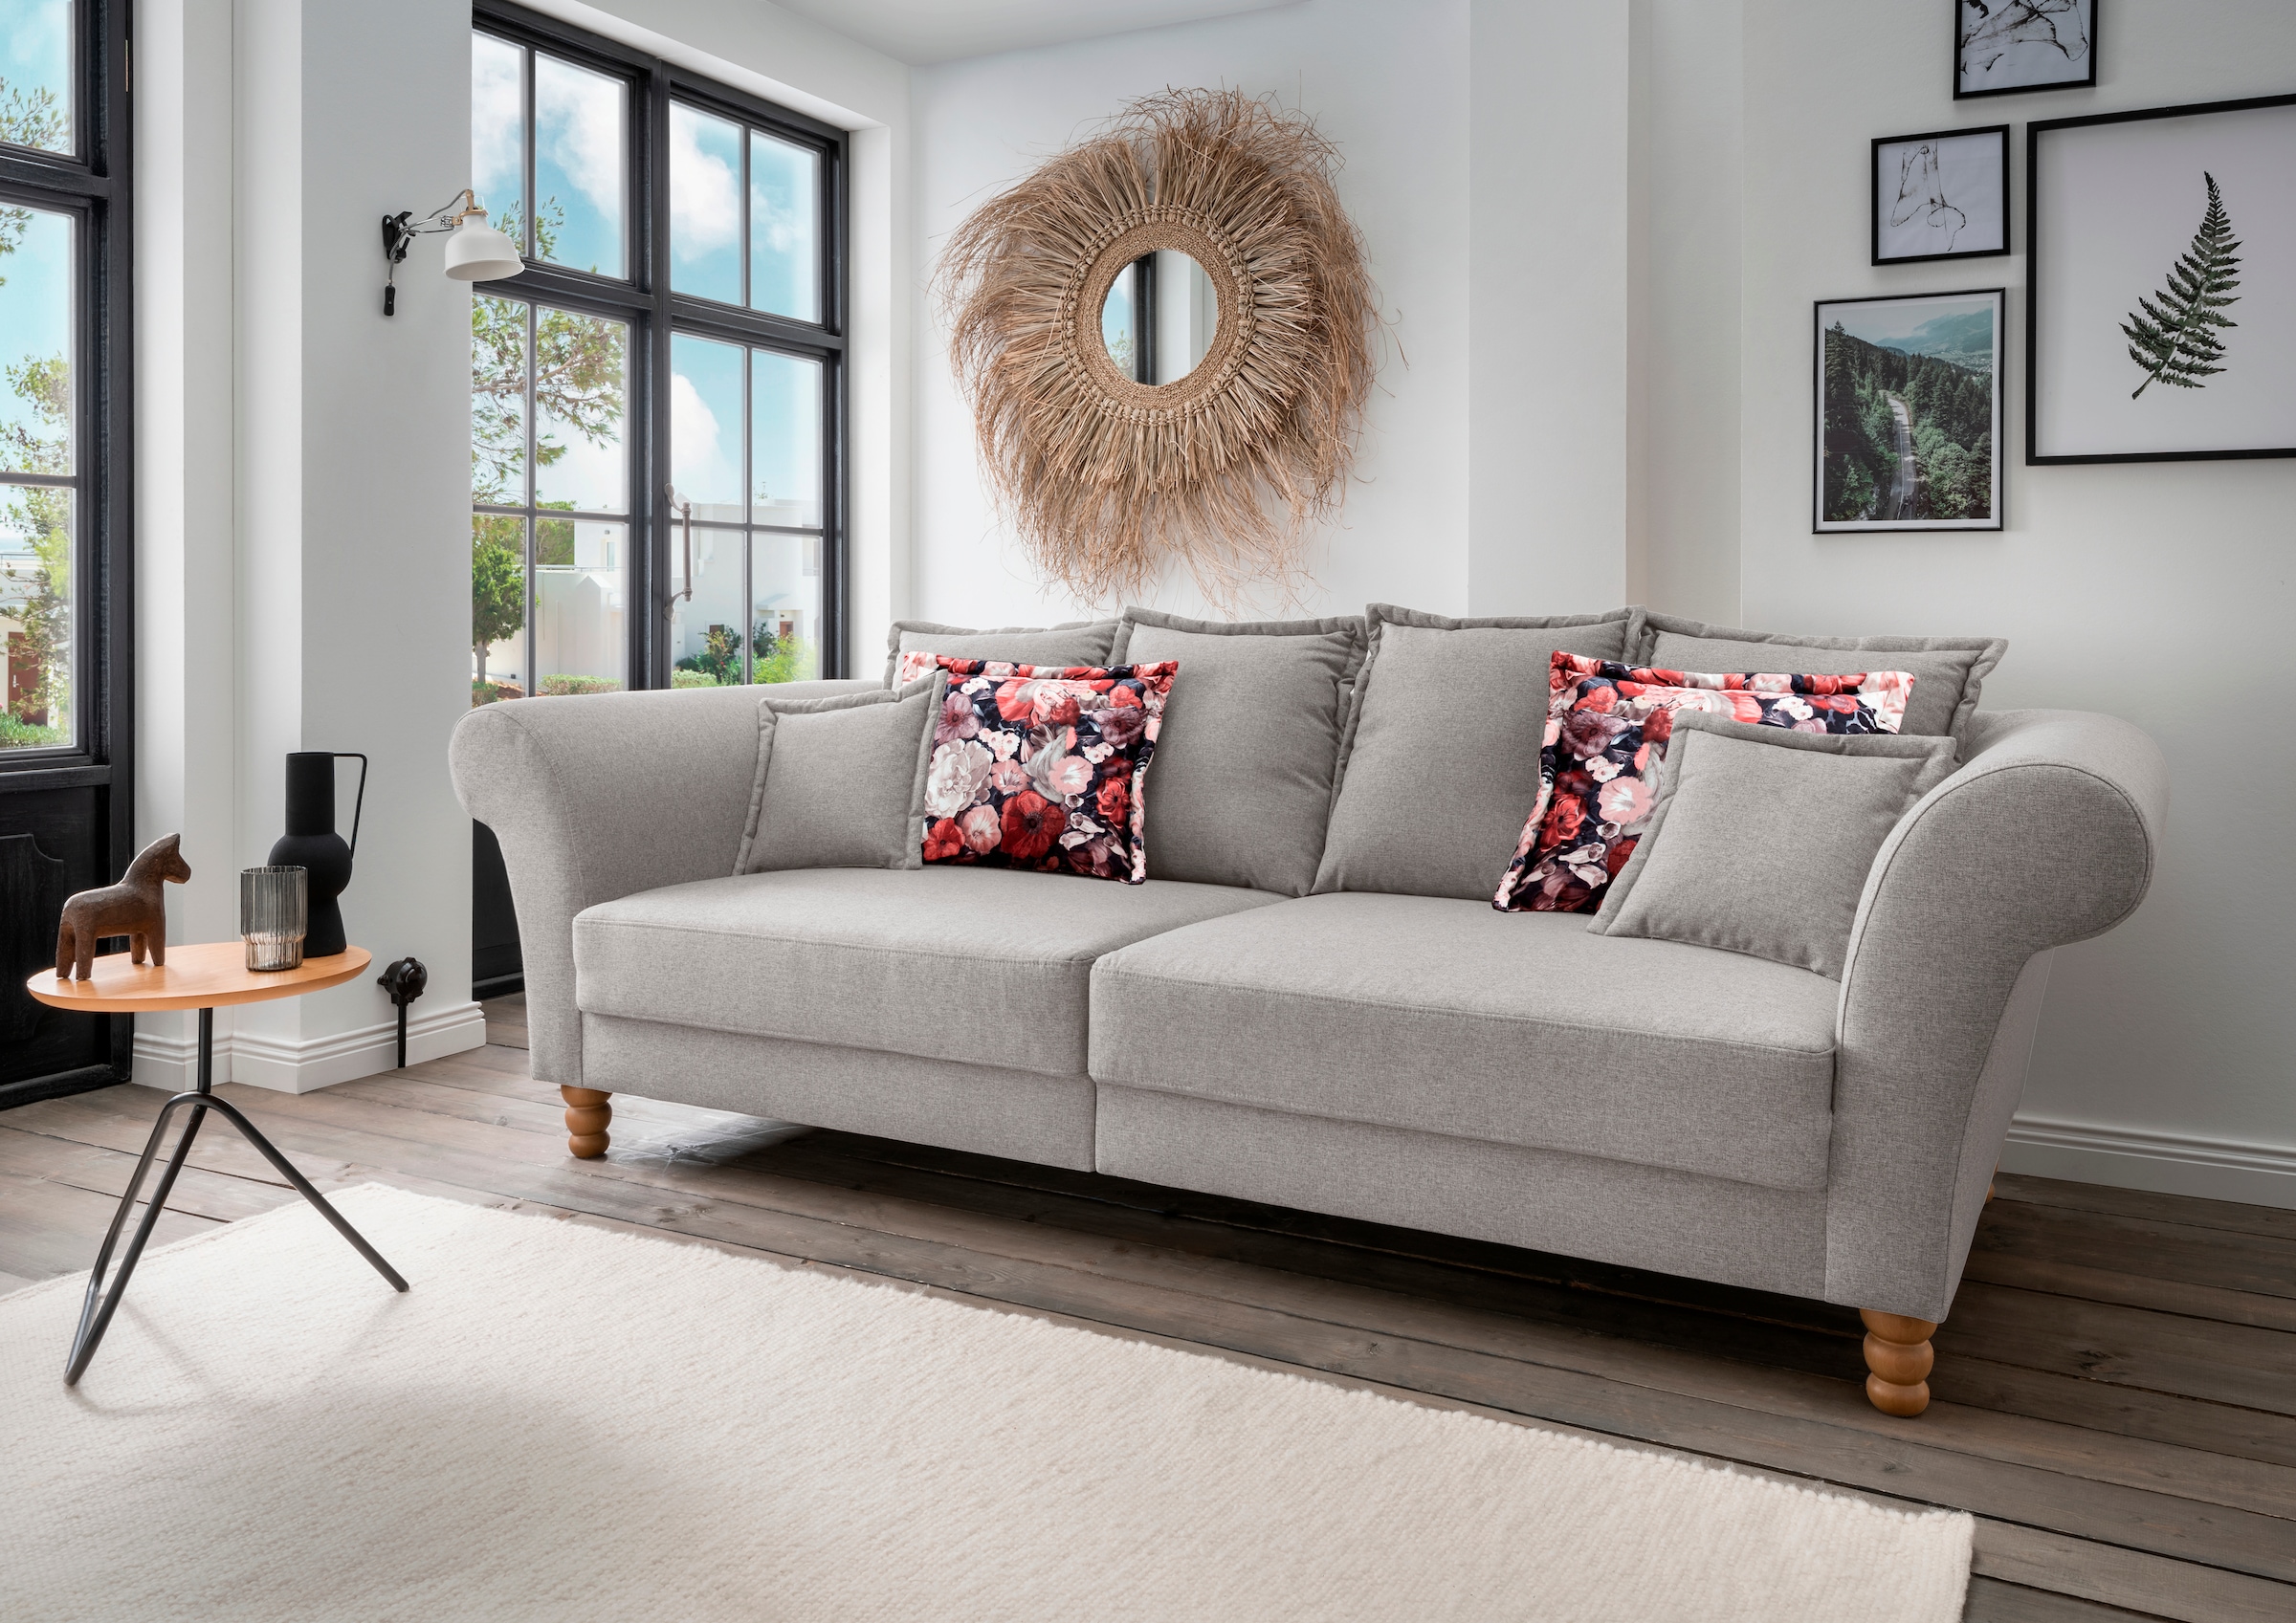 Home affaire Big-Sofa OTTO »Tassilo« kaufen bei